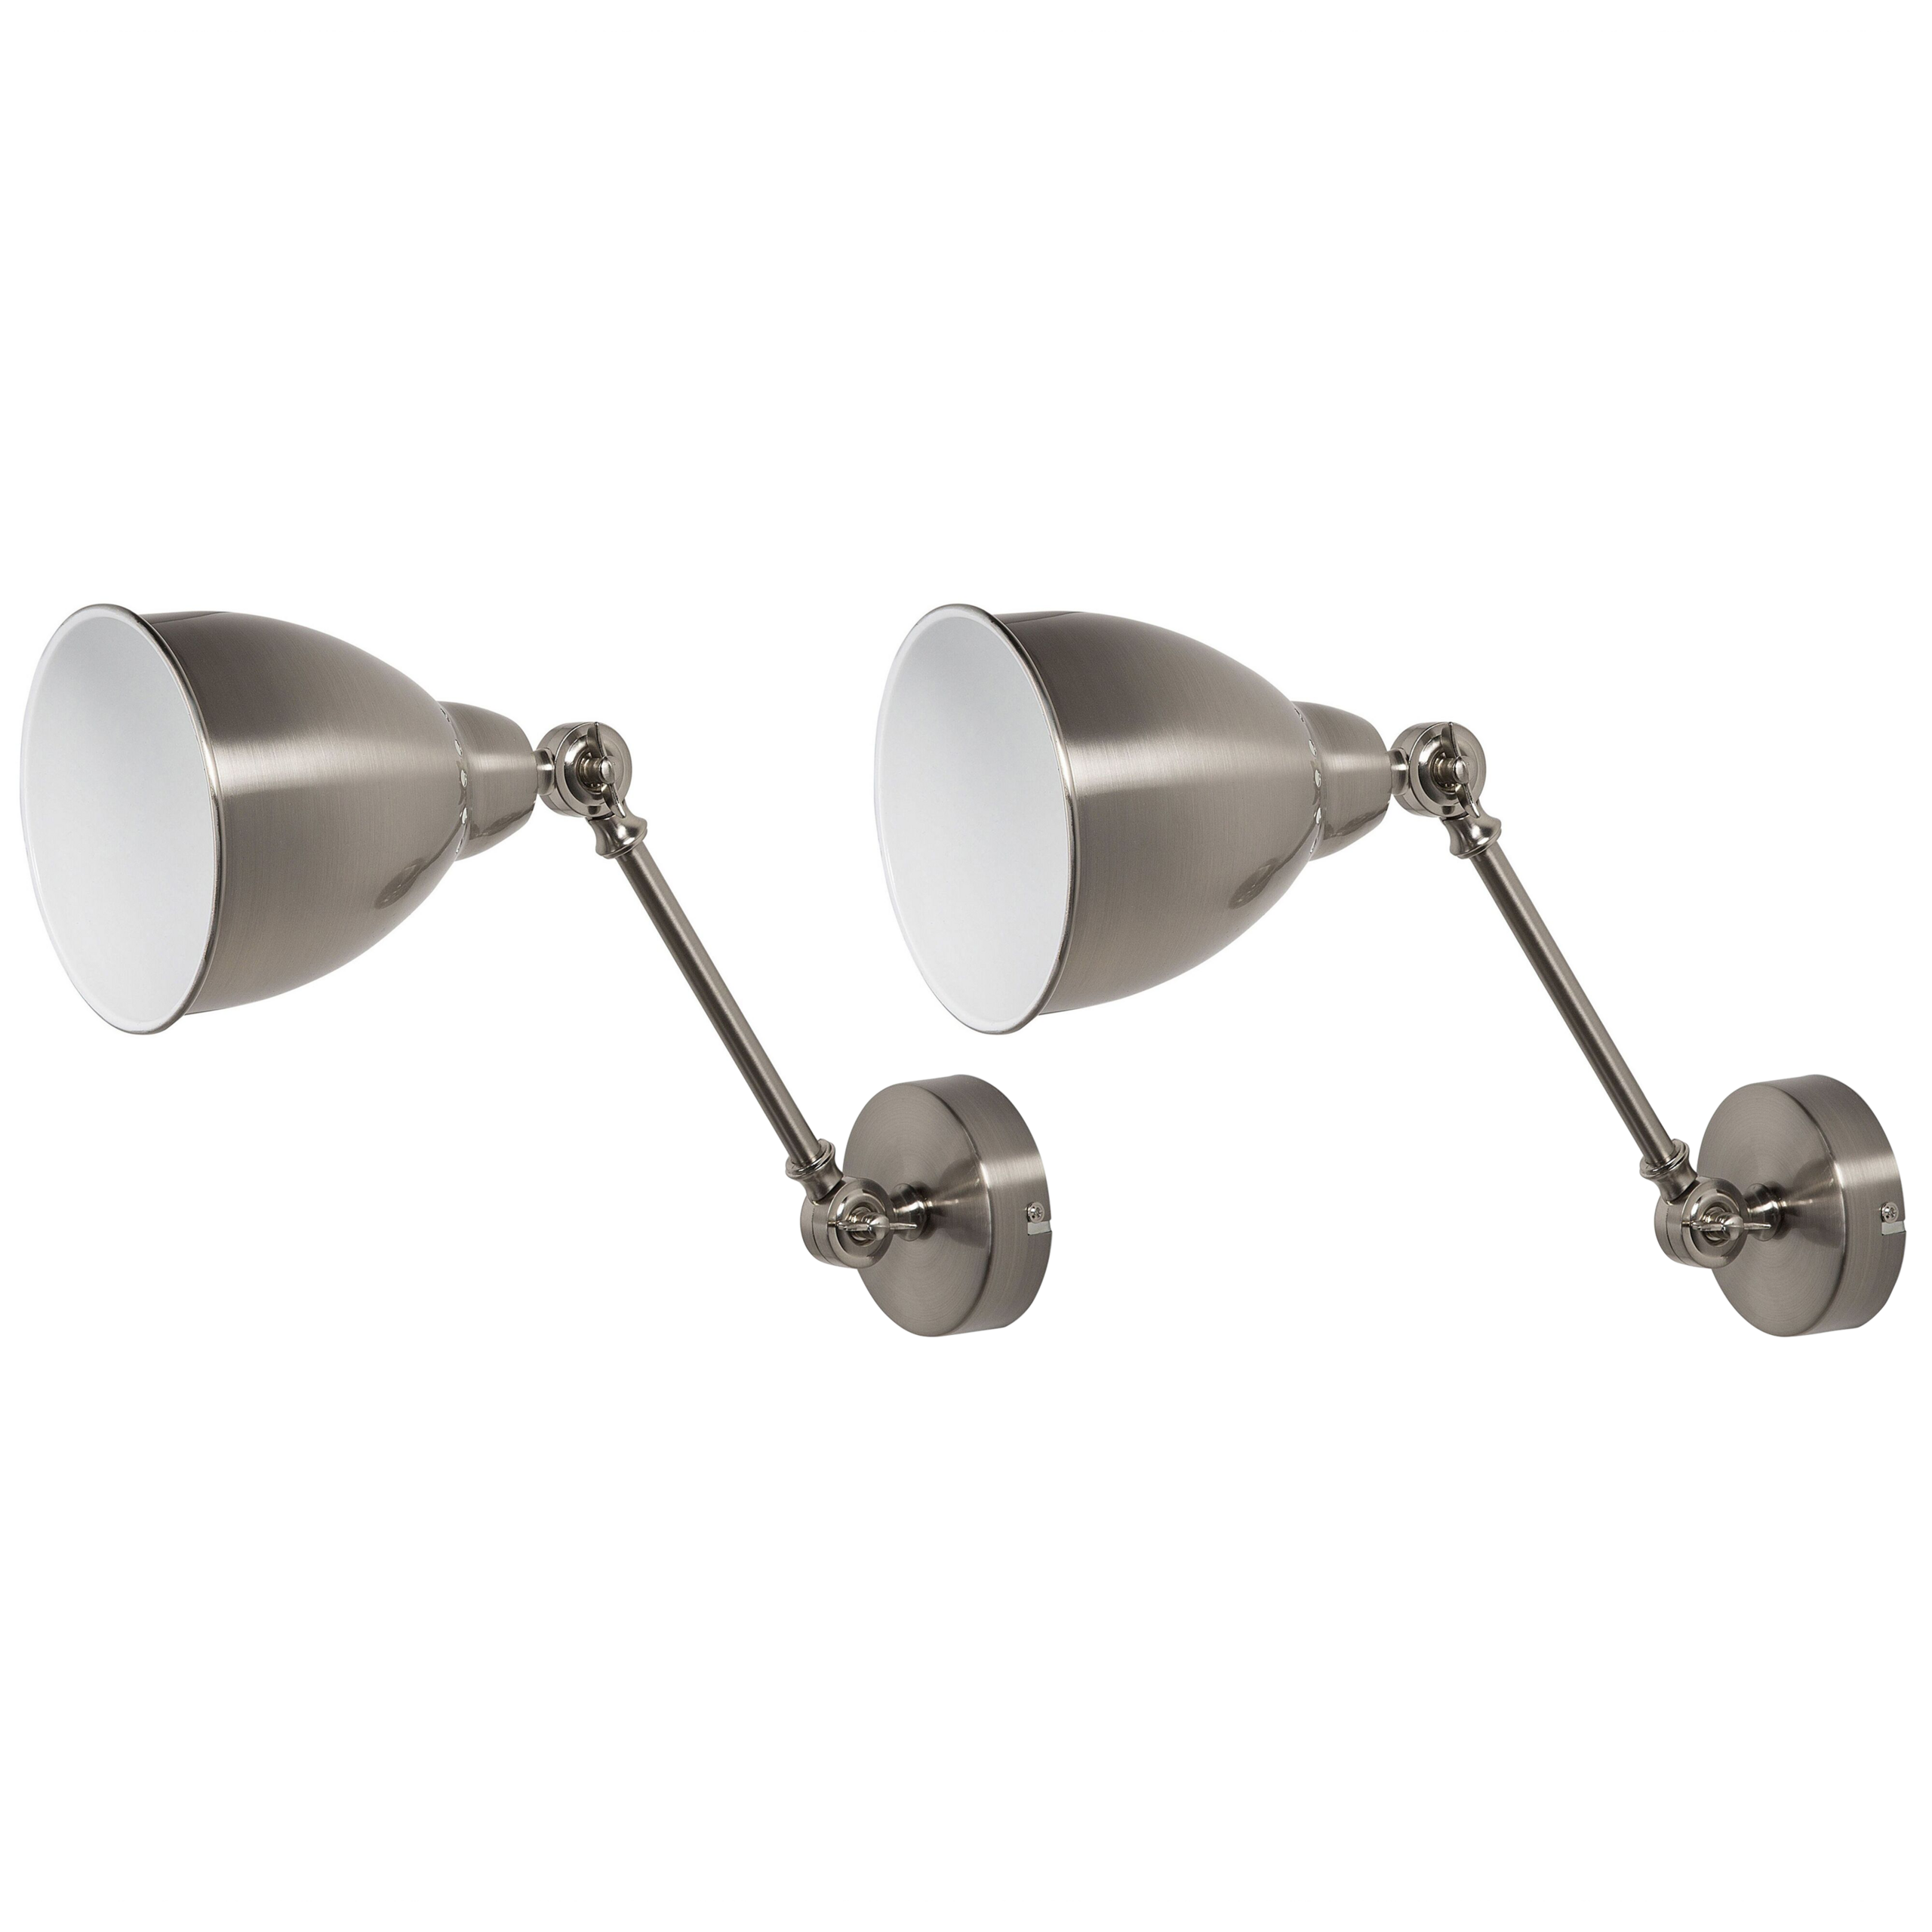 Beliani 2 Wall Lamps Set Silver Metal Adjustable Light Position Swing Arm Modern